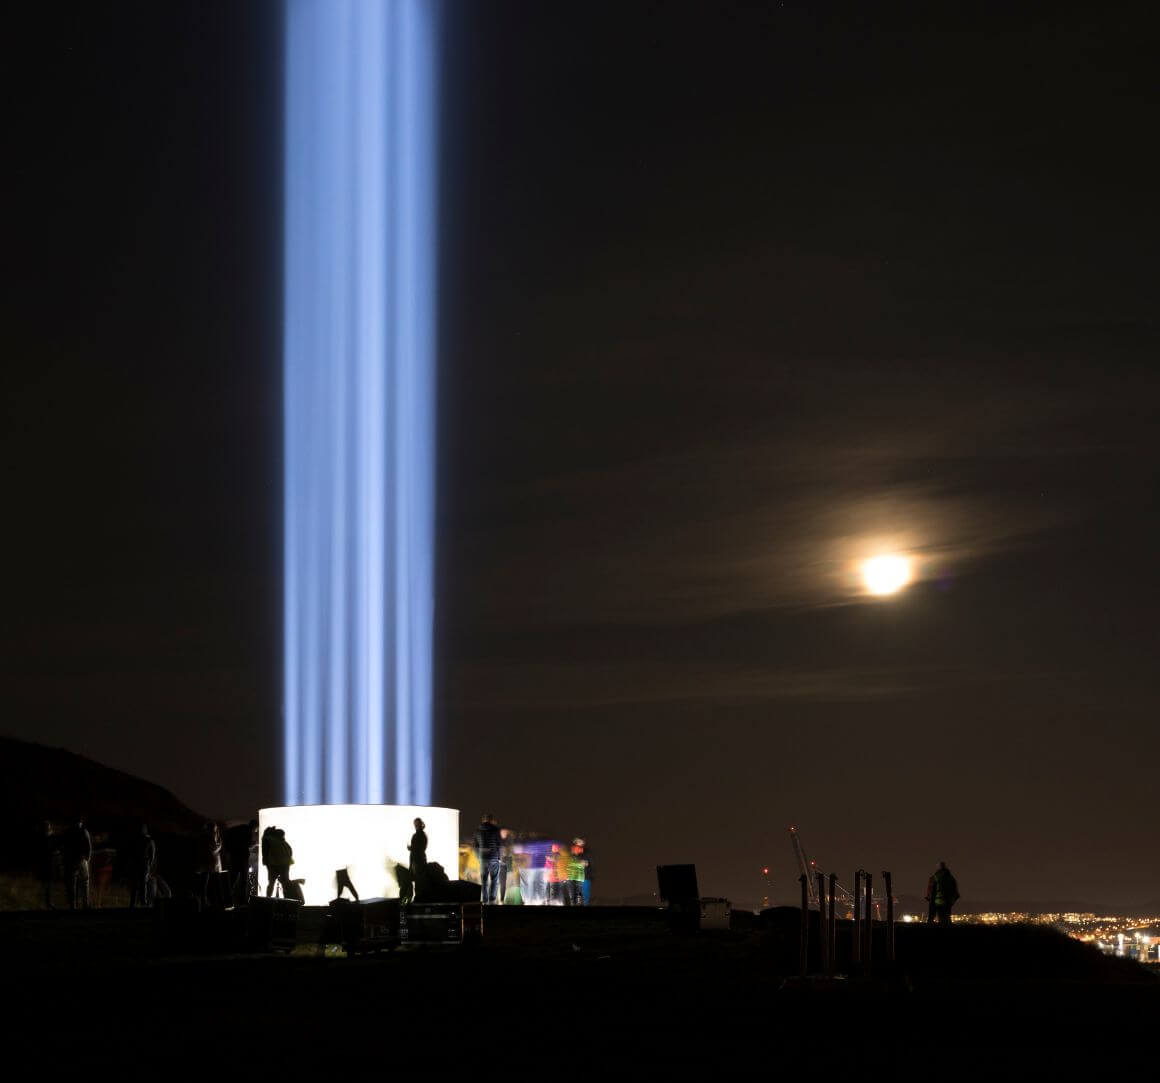 Imagine Peace Tower Reykjavik